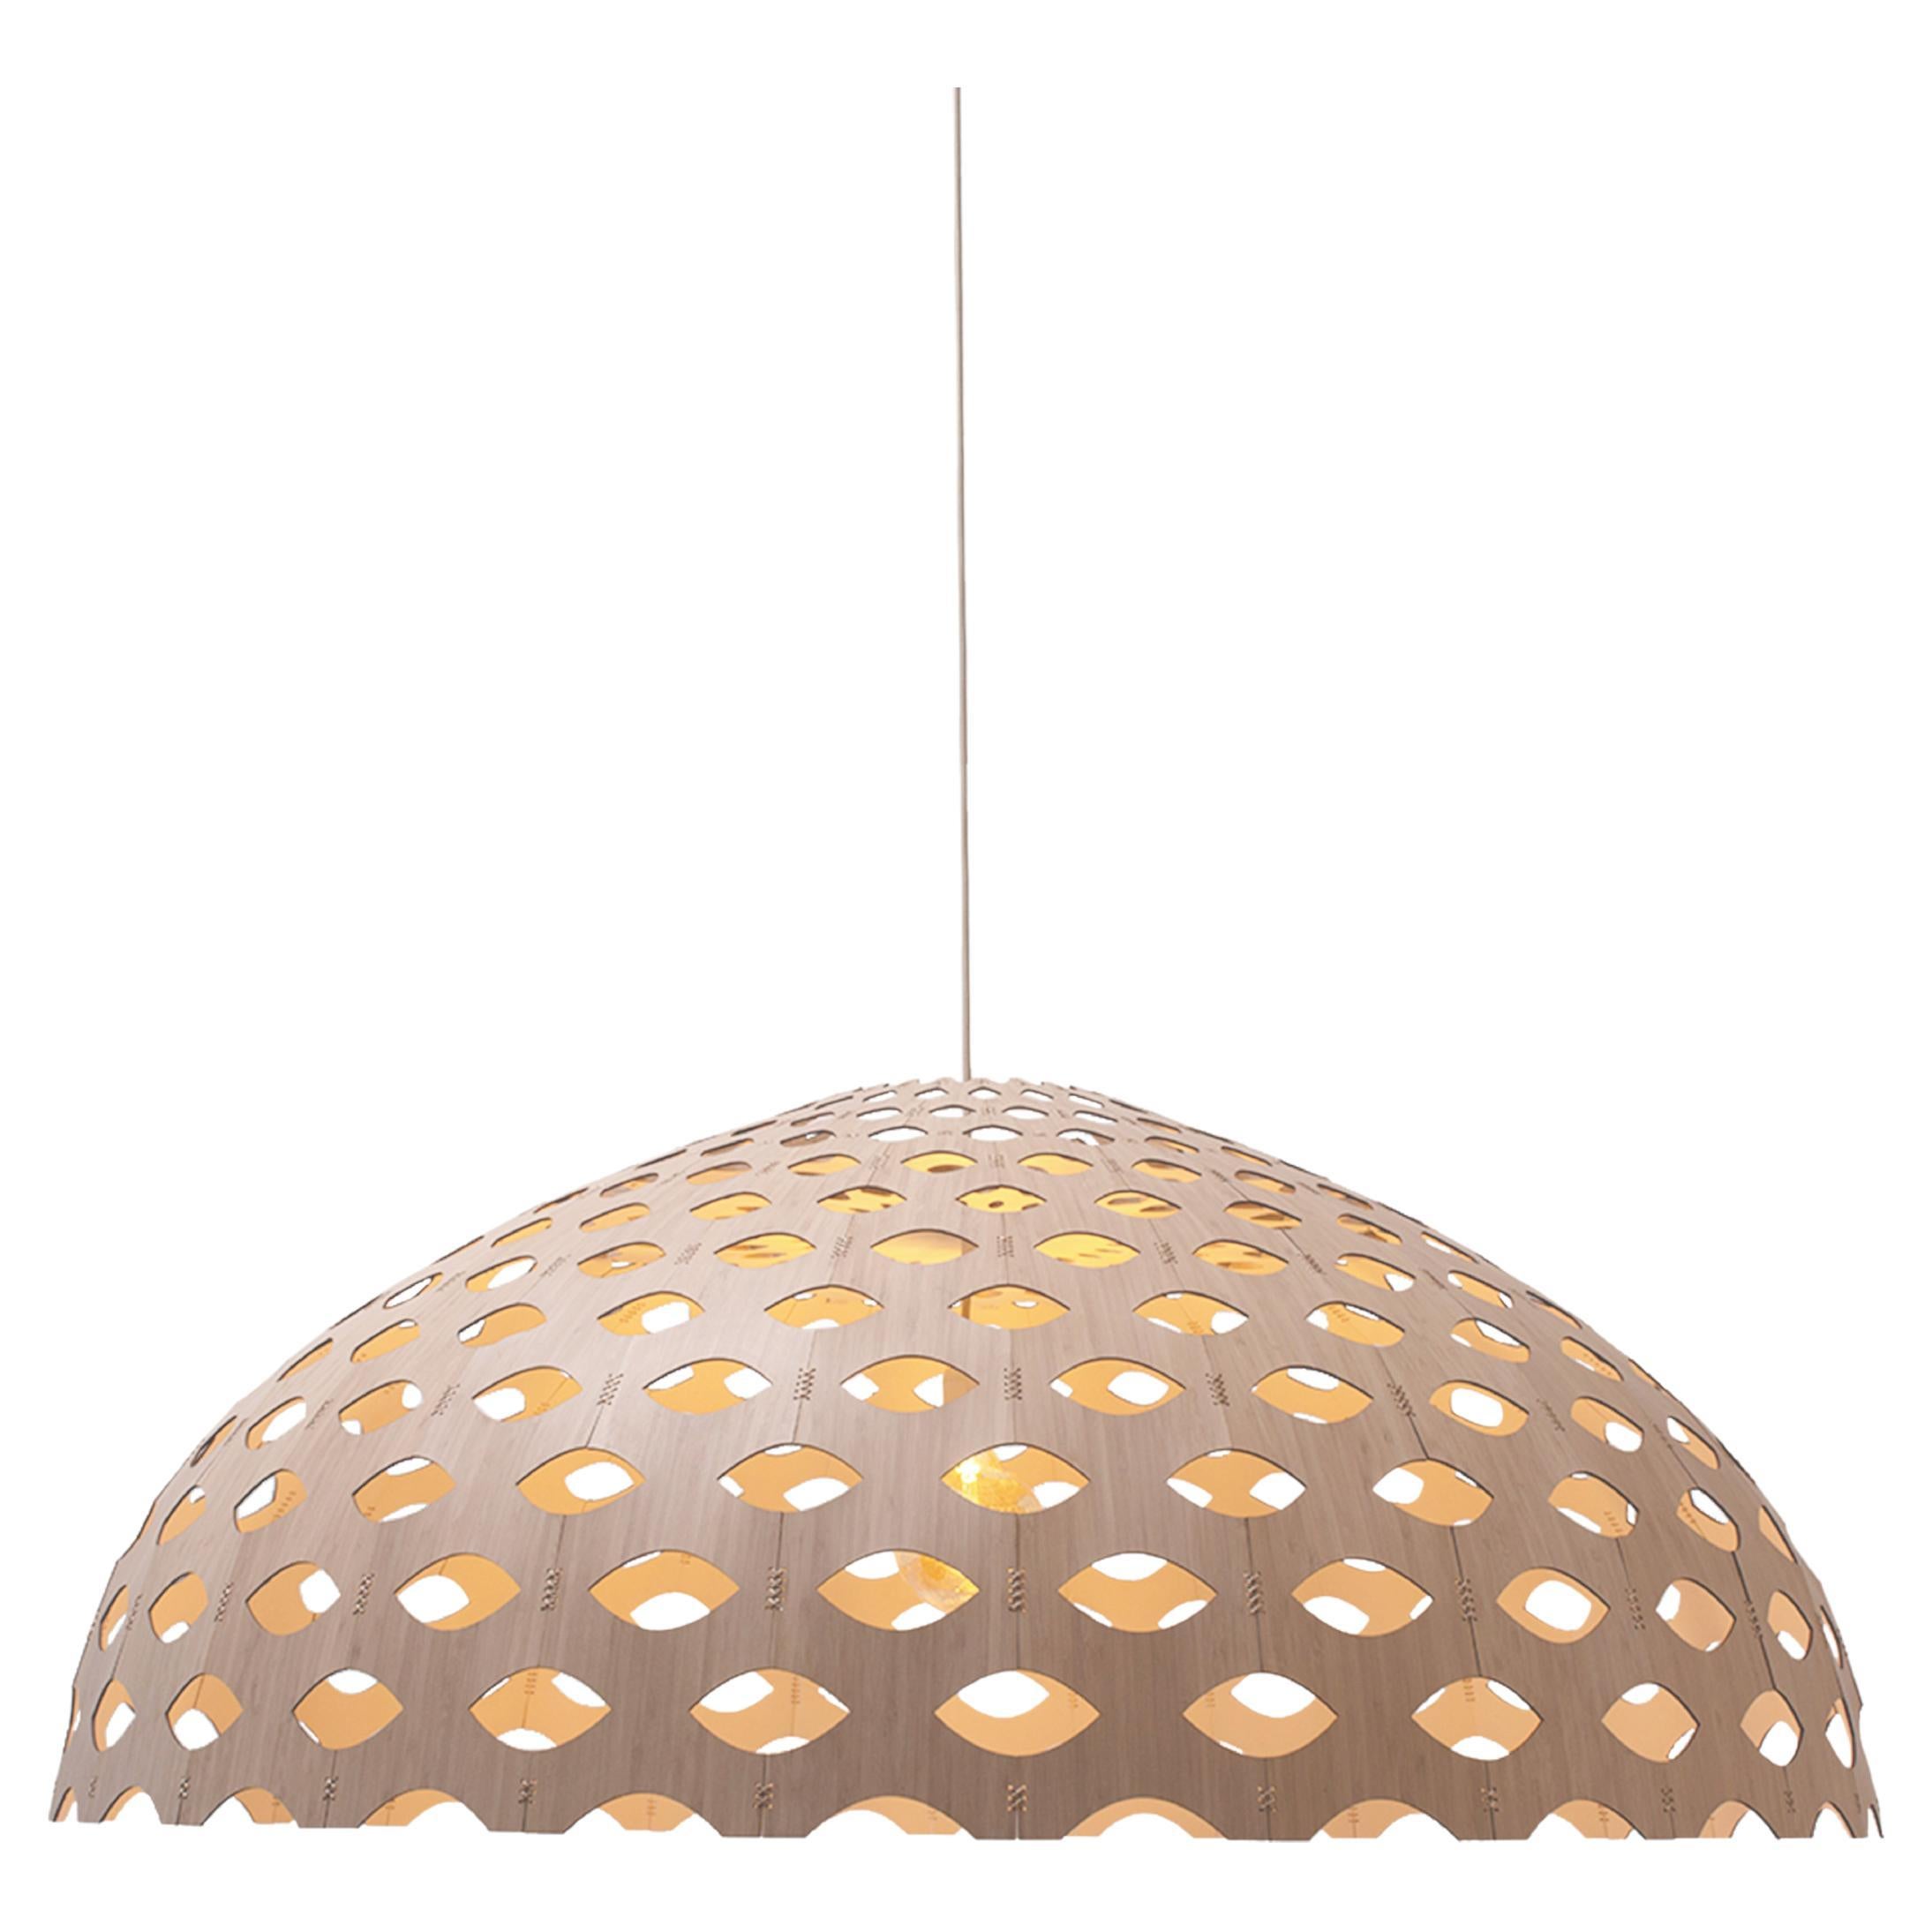 Panelitos Dome Lamp Medium by Piegatto, a Contemporary Sculptural Lamp